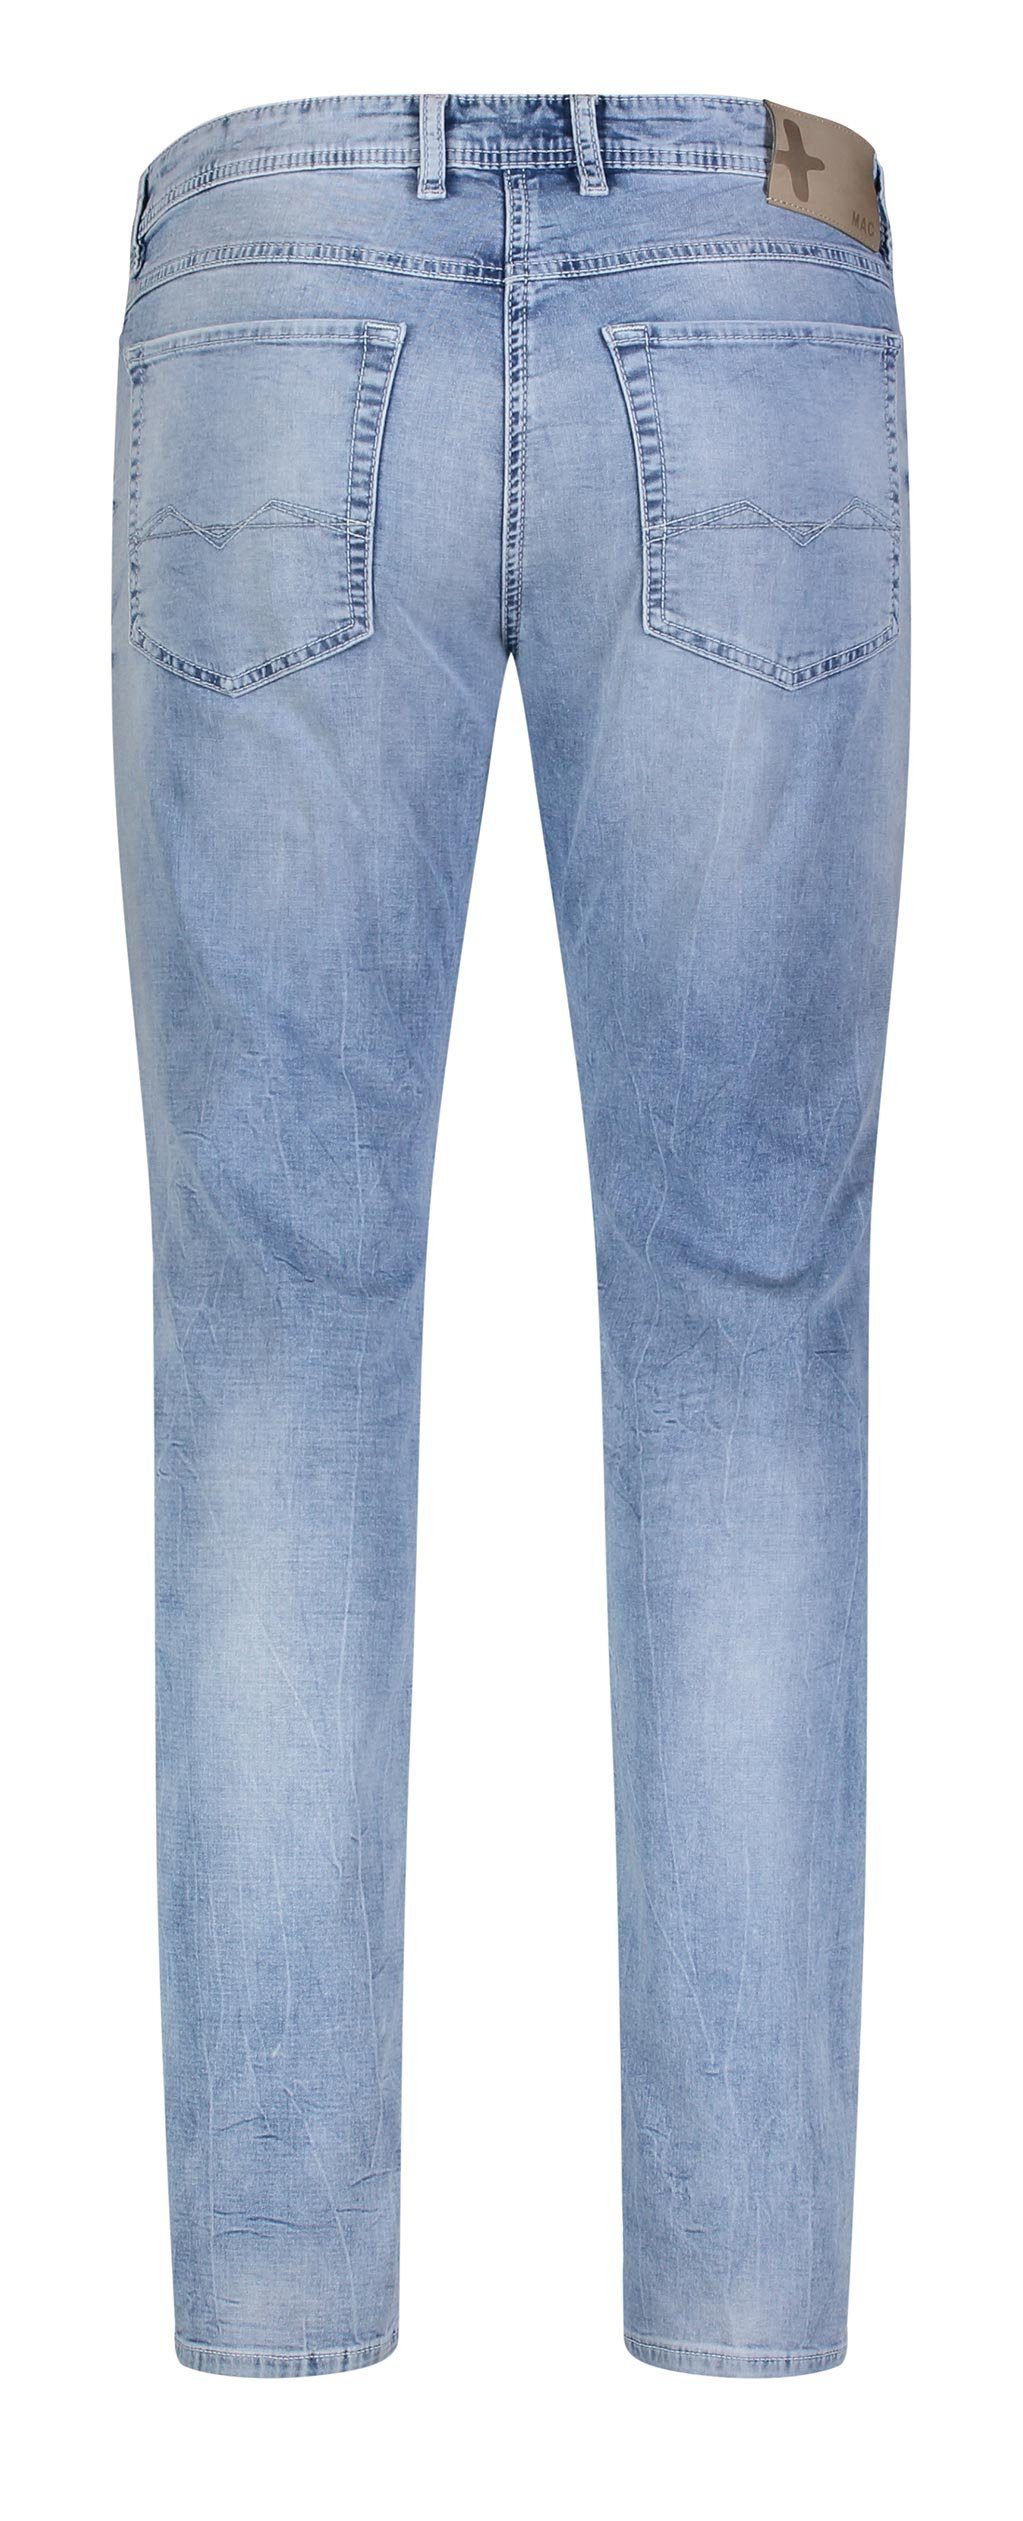 sky MAC 5-Pocket-Jeans JEANS light H230 MAC blue 0590-00-0994L authentic JOG'N